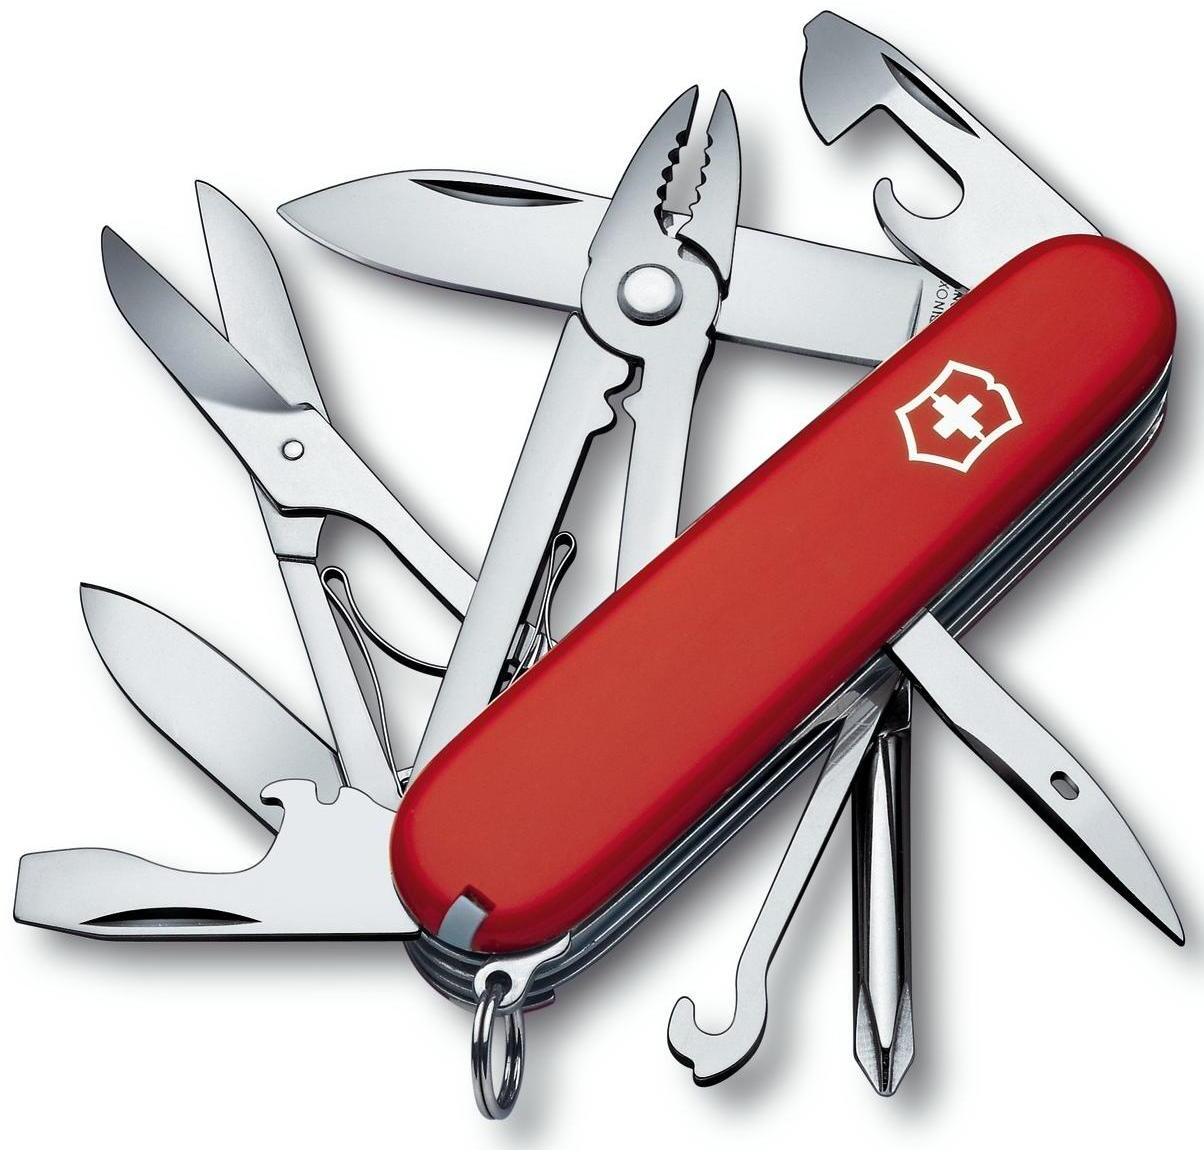 Нож Victorinox Deluxe Tinker (1.4723) красный